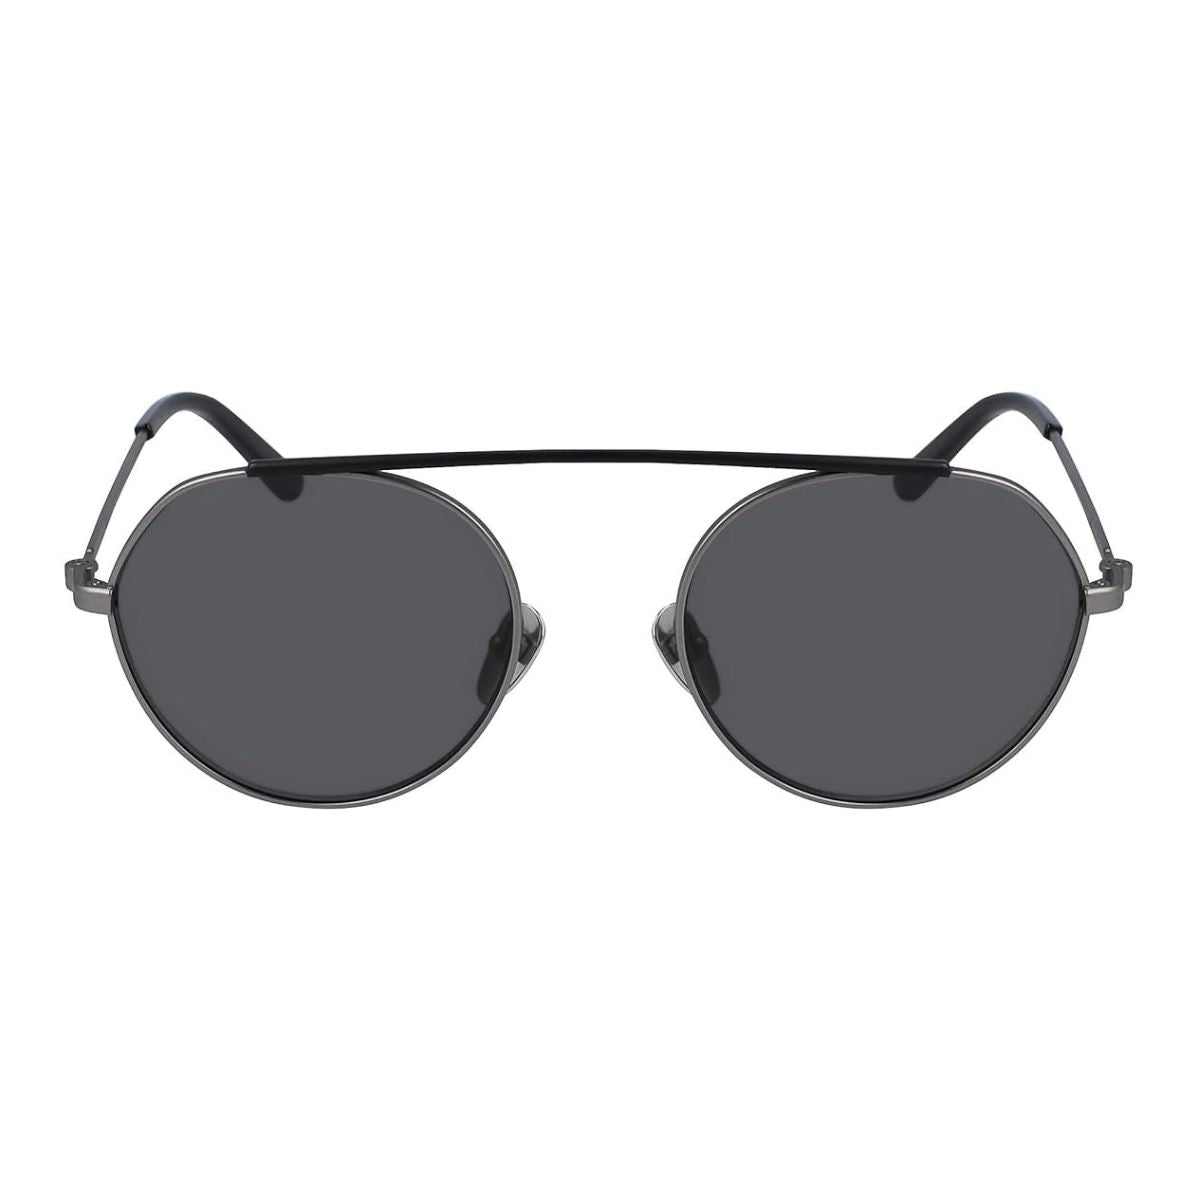 "Buy Trending CK Rounded Sunglasses For Mens At Optorium"